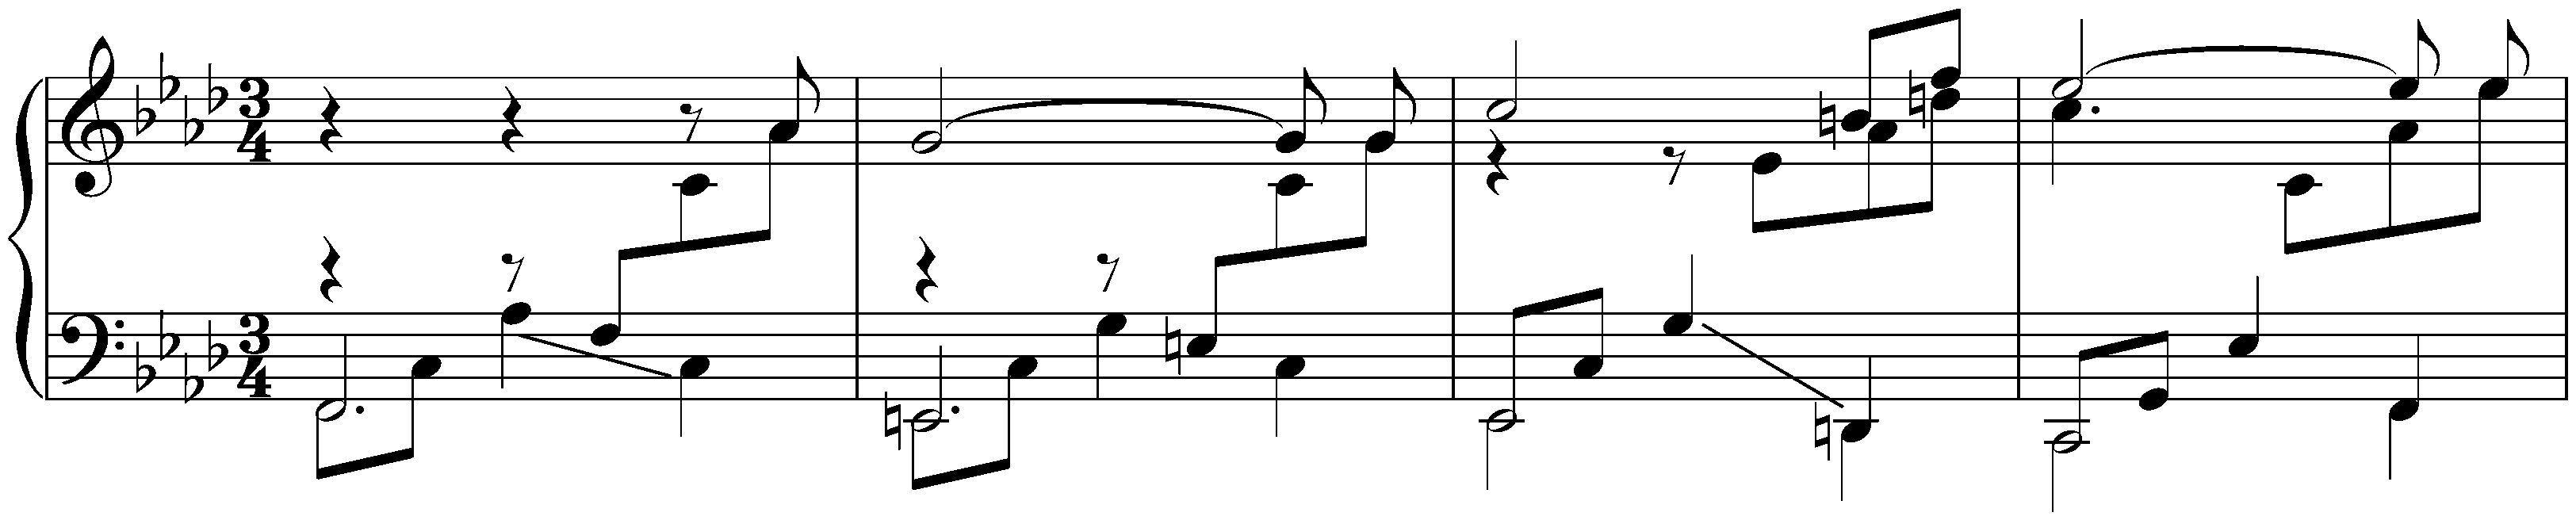 Kurze Stücke; 16. F minor